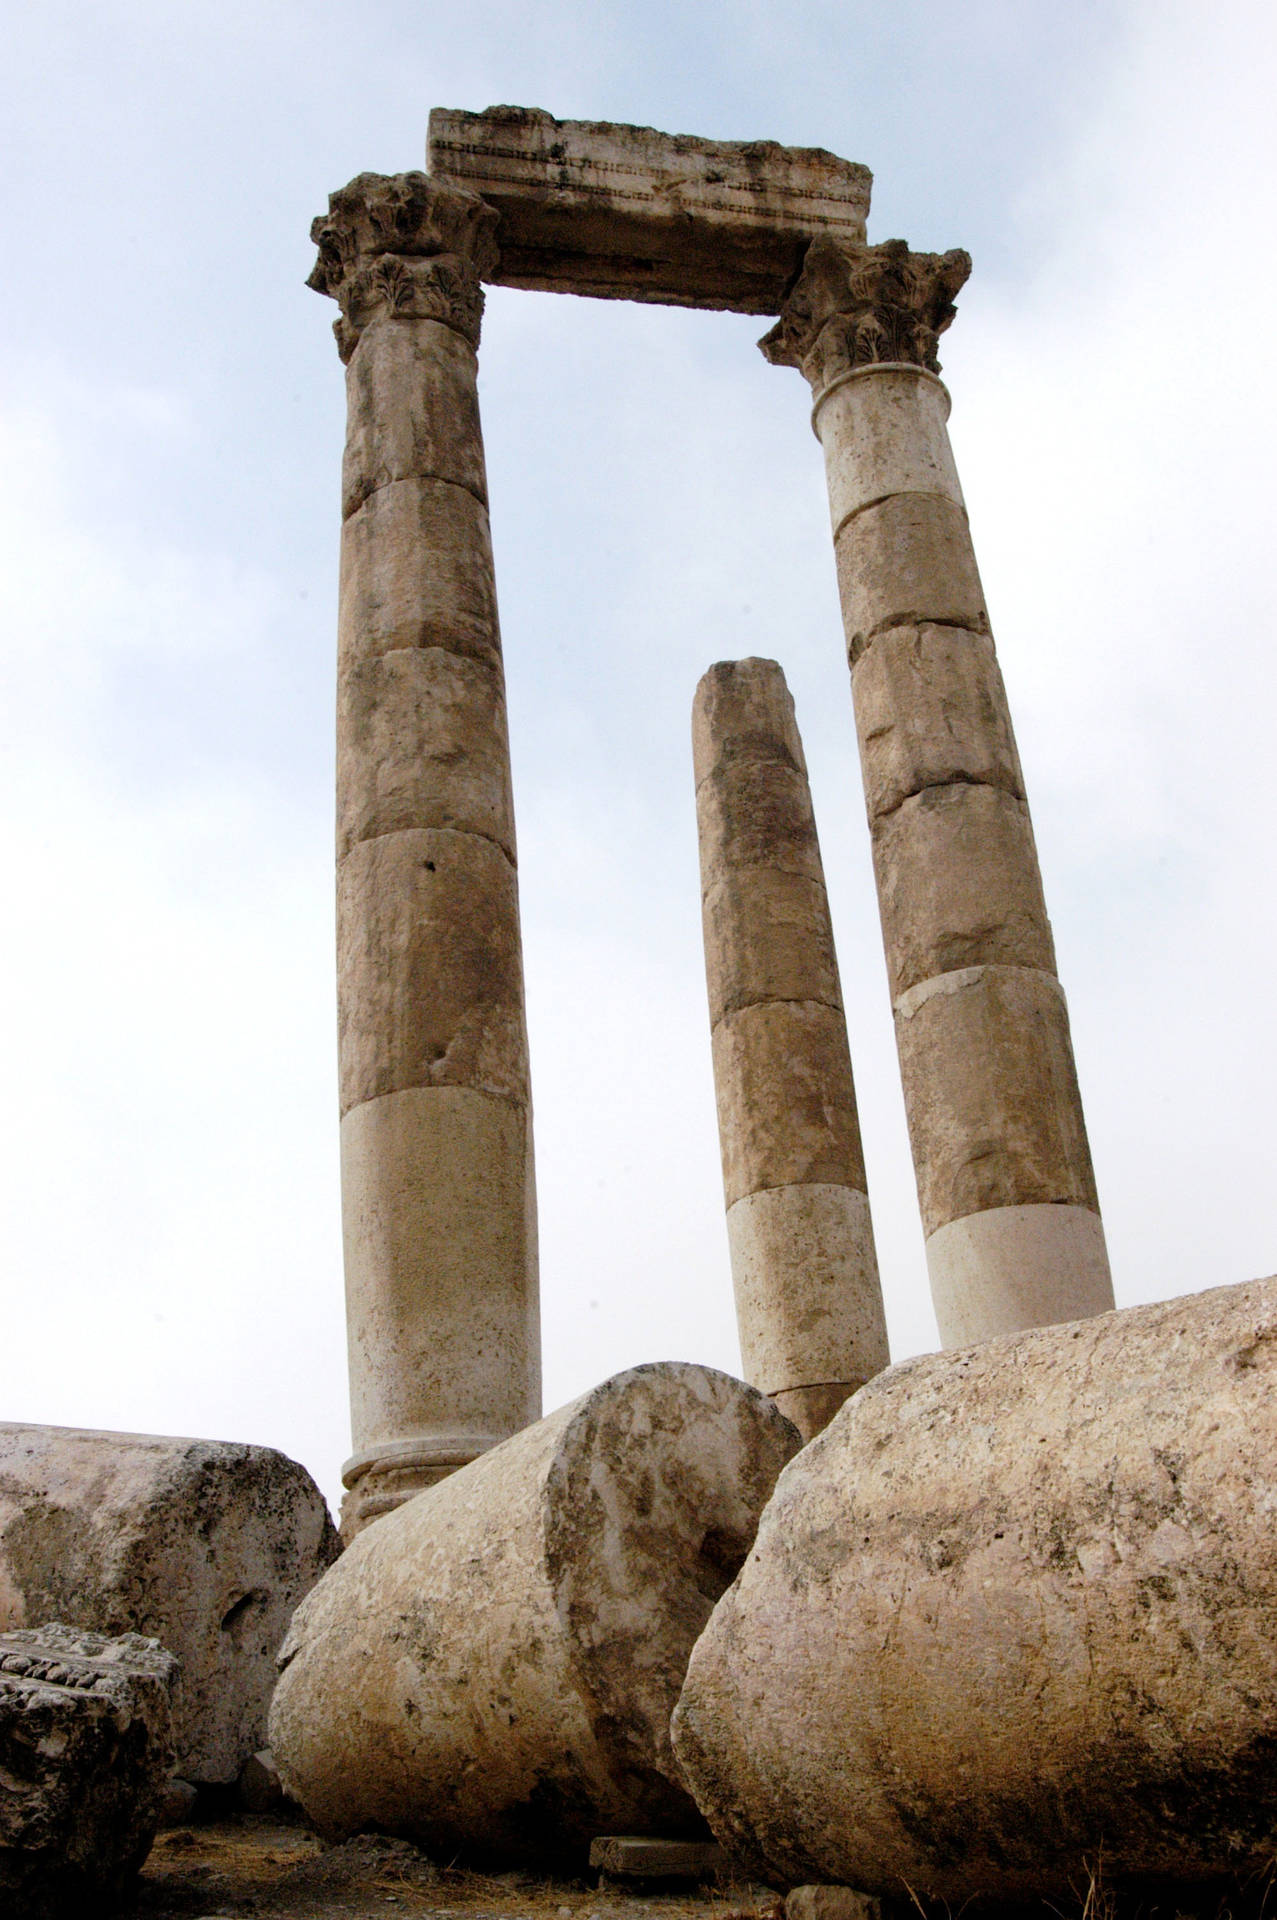 Caption: Ancient Roman Columns In Jordan